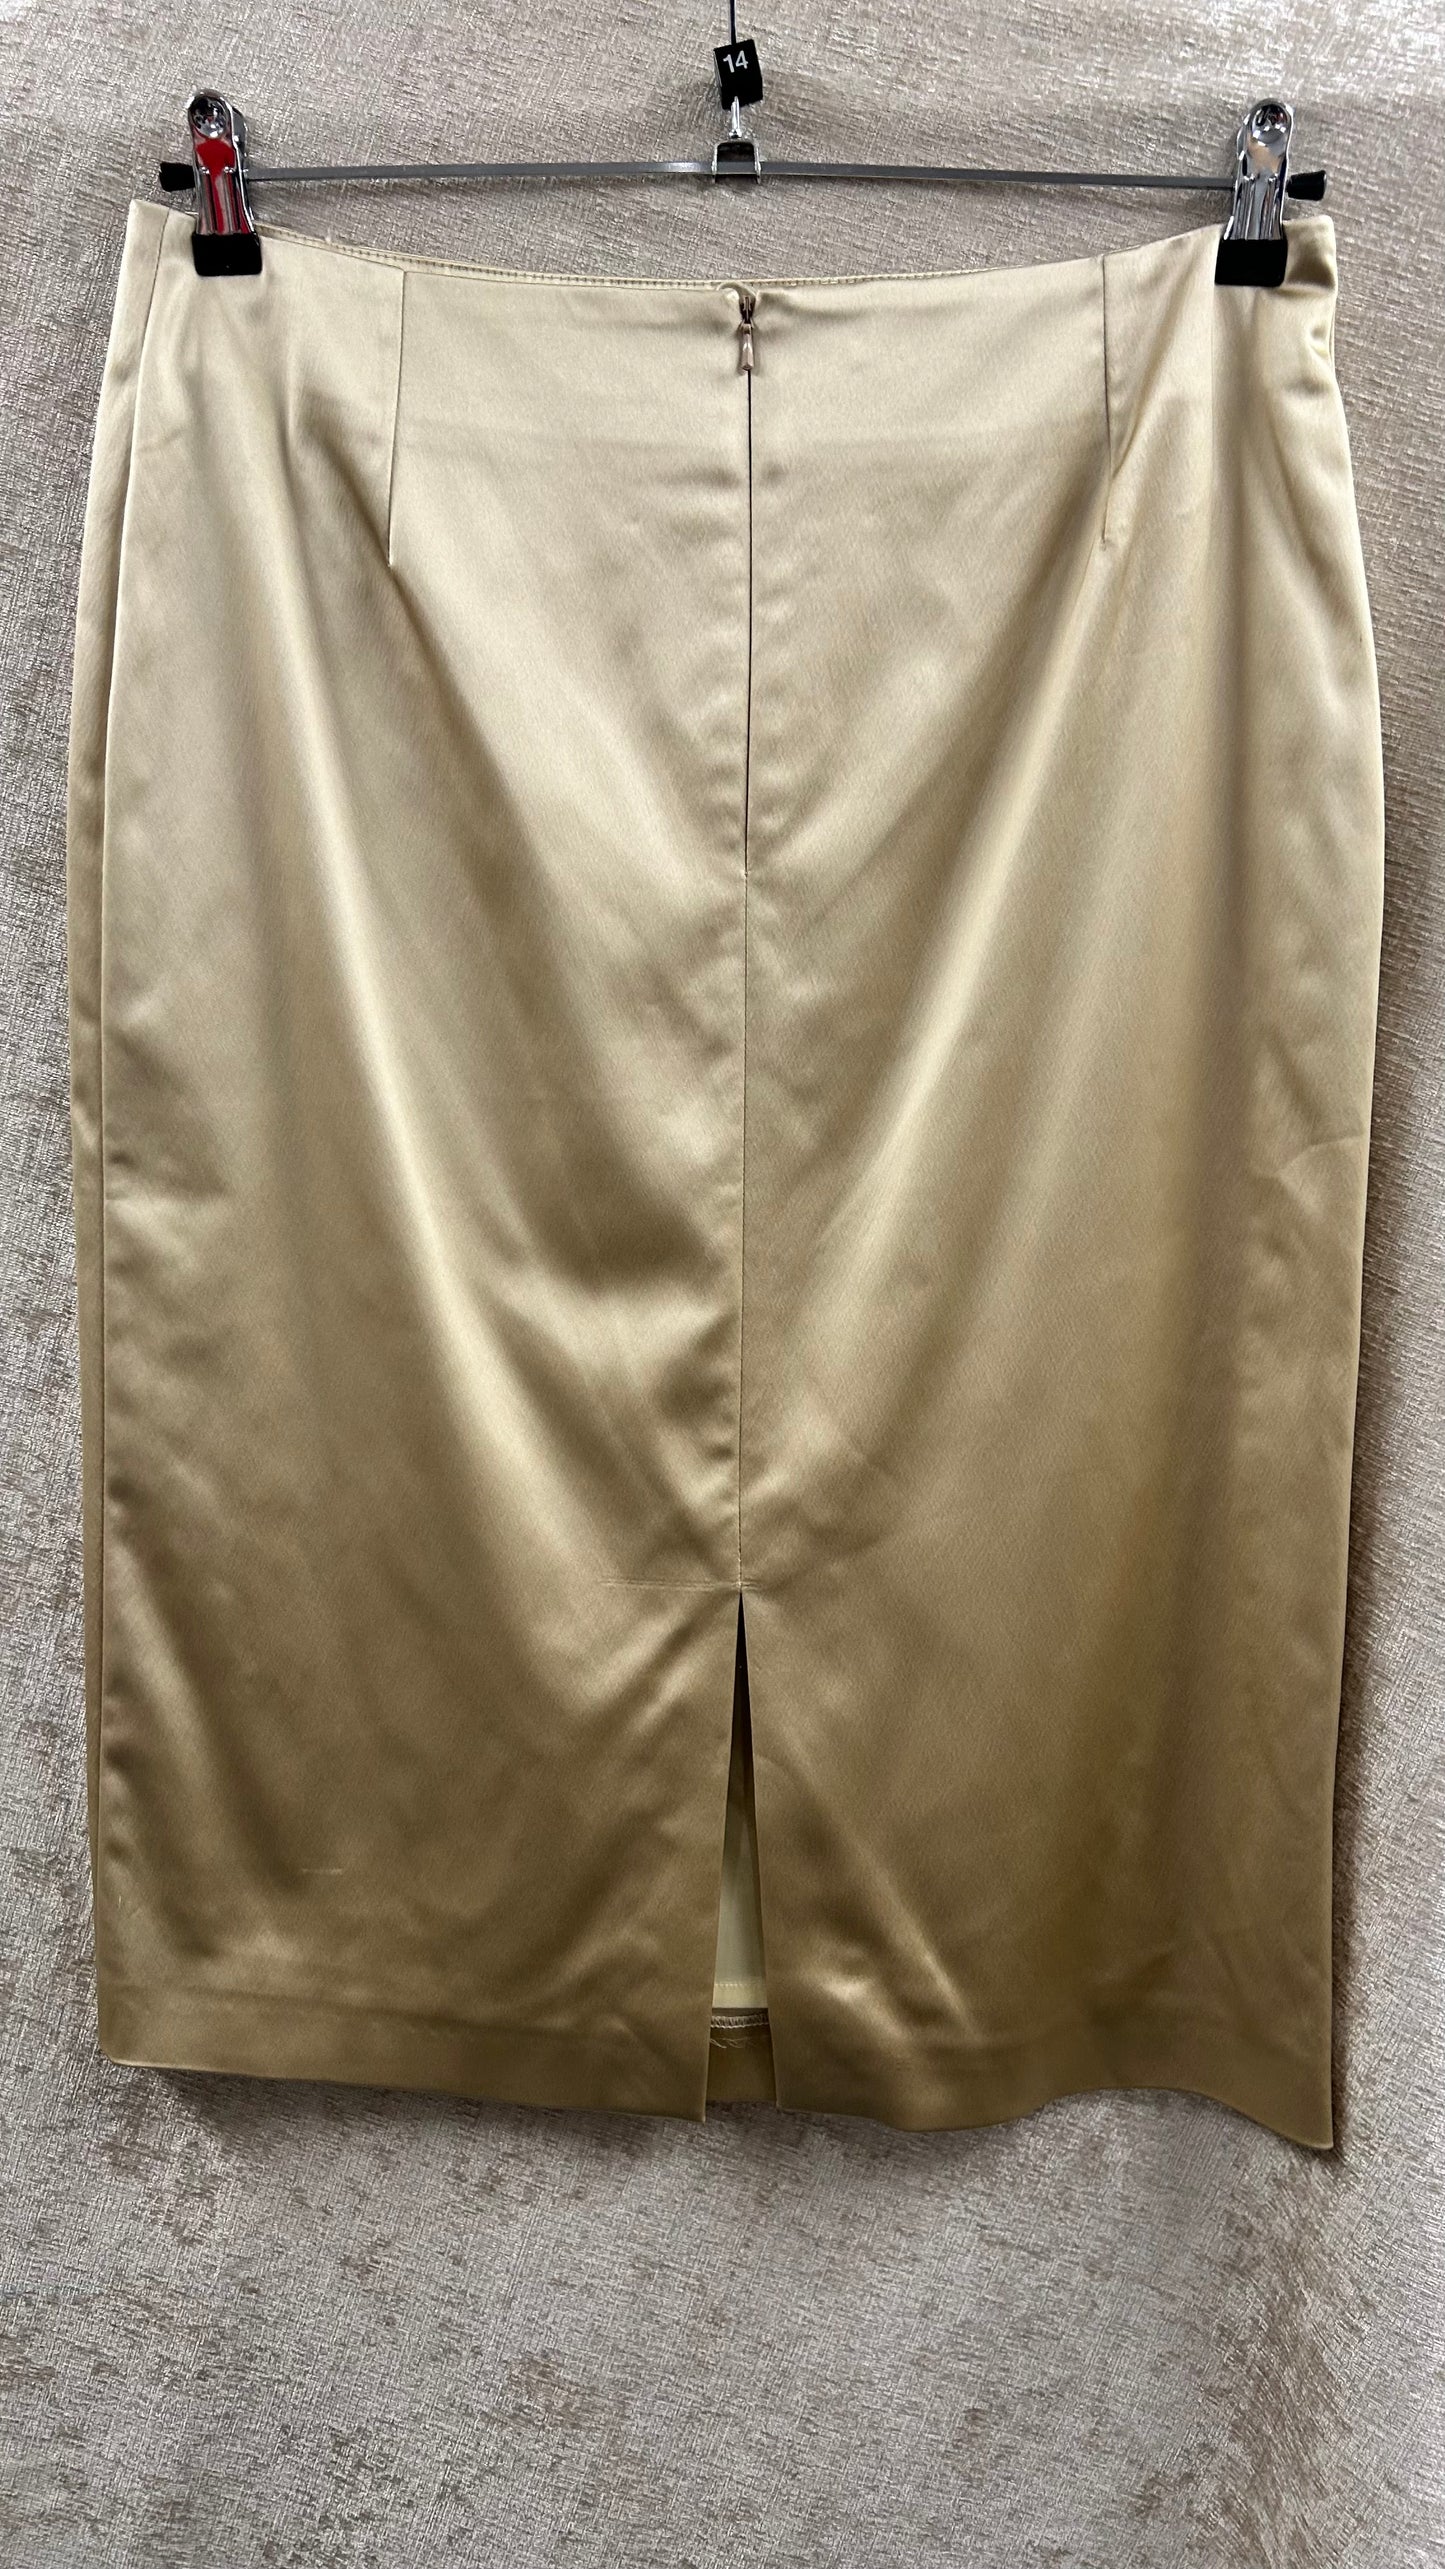 Coast Gold Pencil Skirt size 14